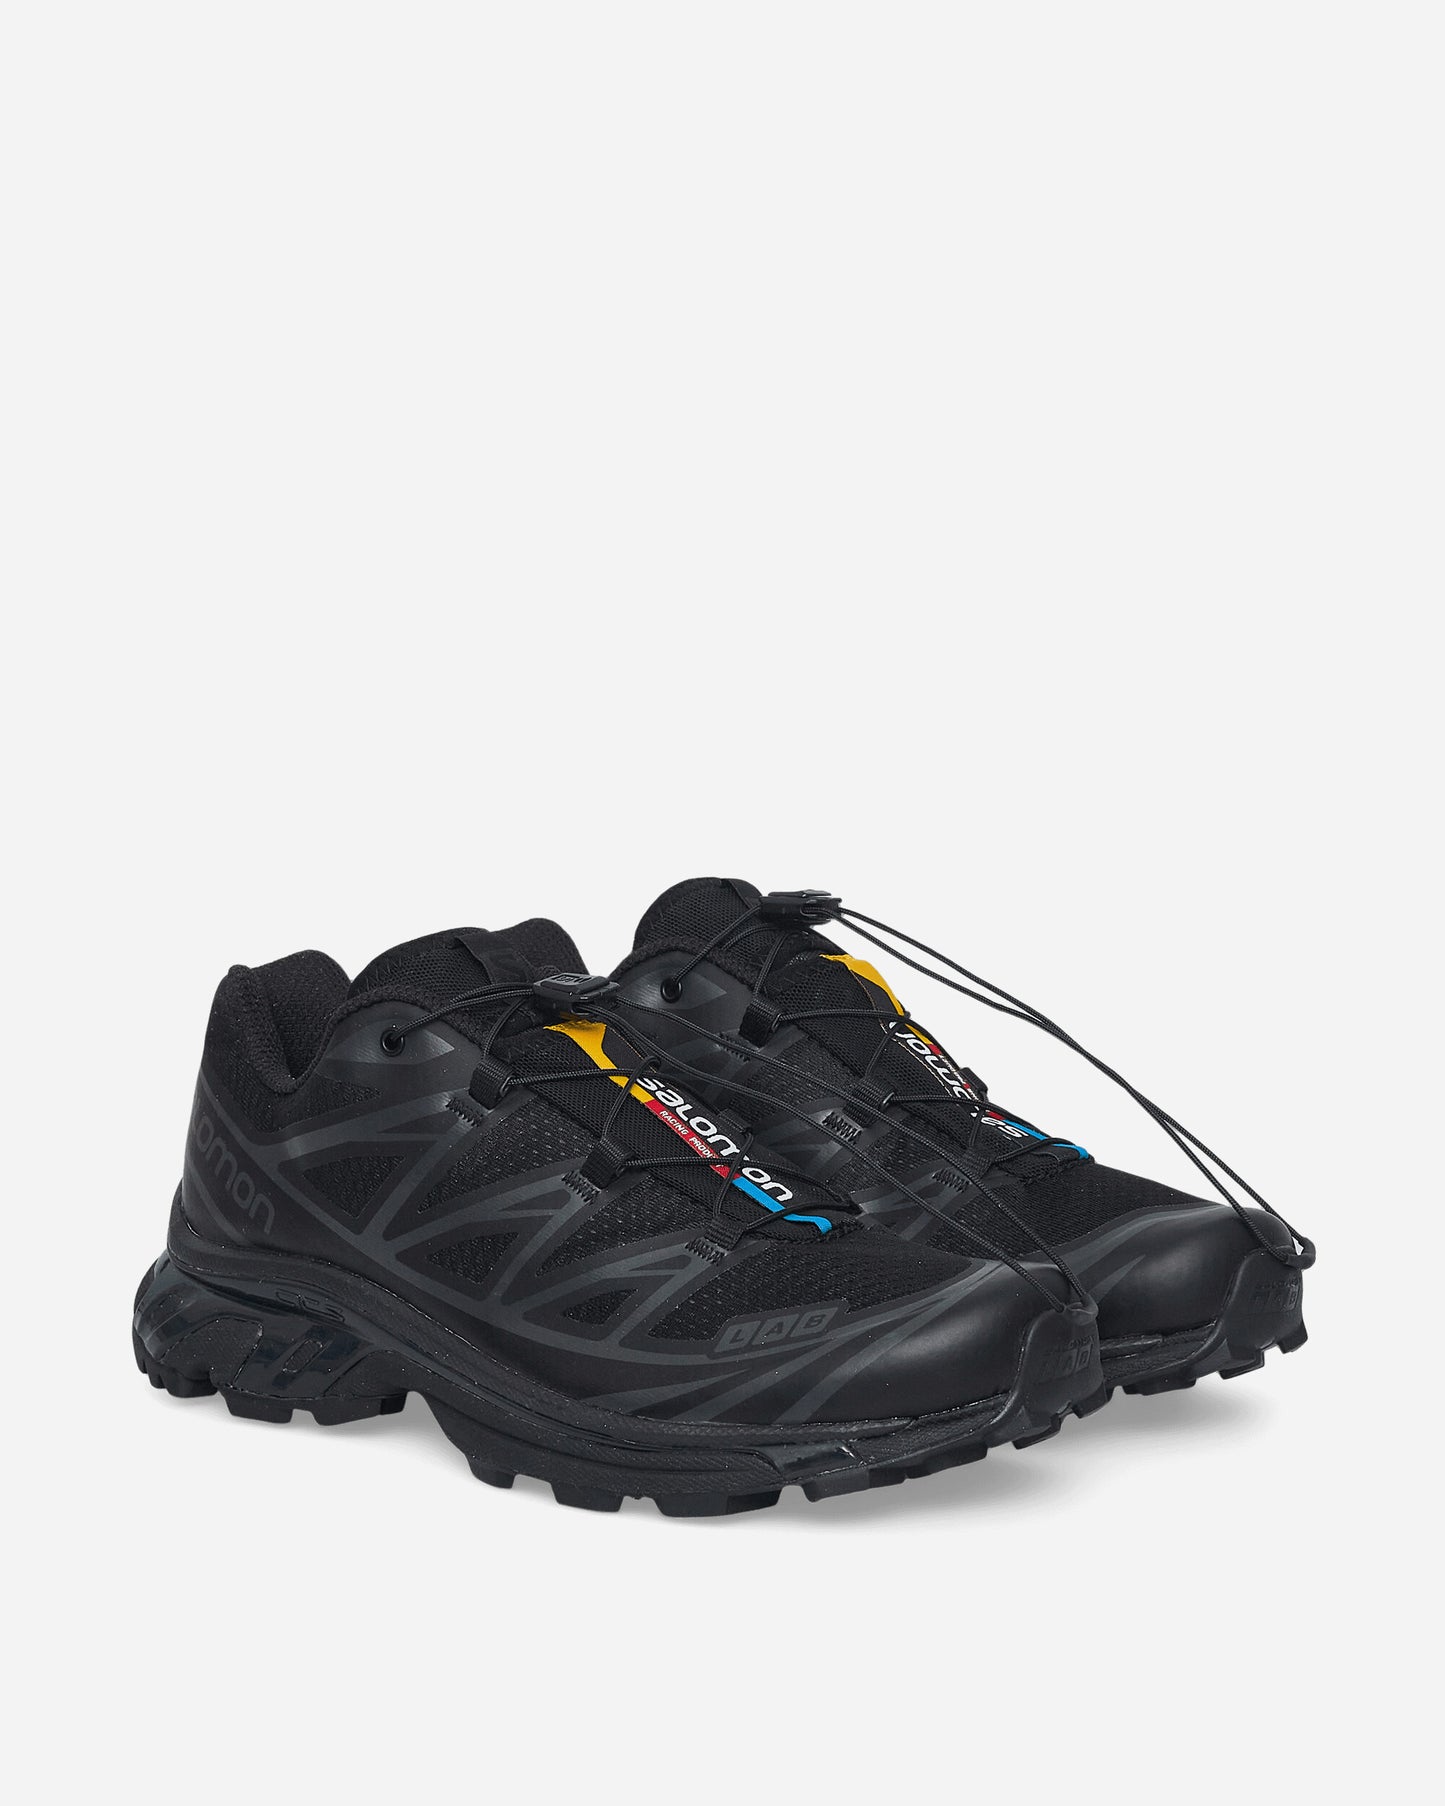 Salomon Xt-6 Black/Black/Phantom Sneakers Low L41086600